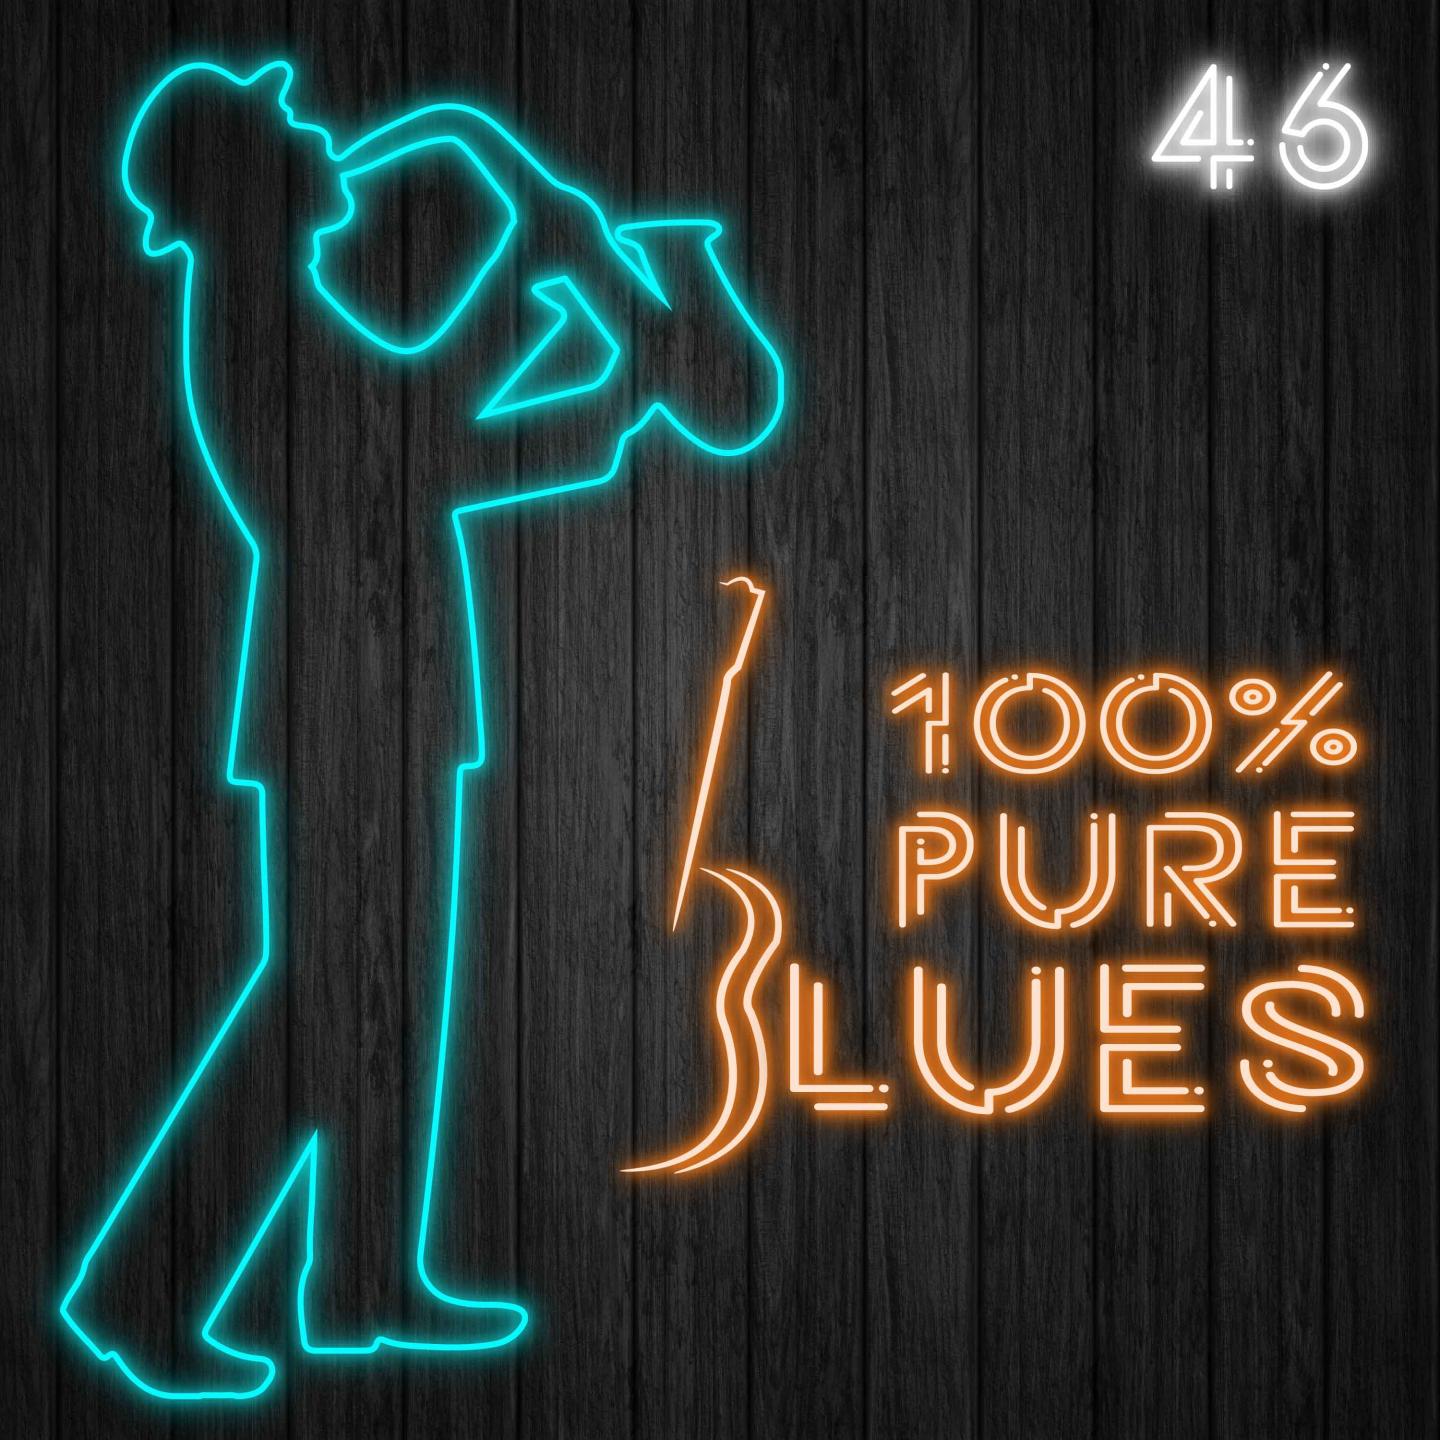 100% Pure Blues / 46